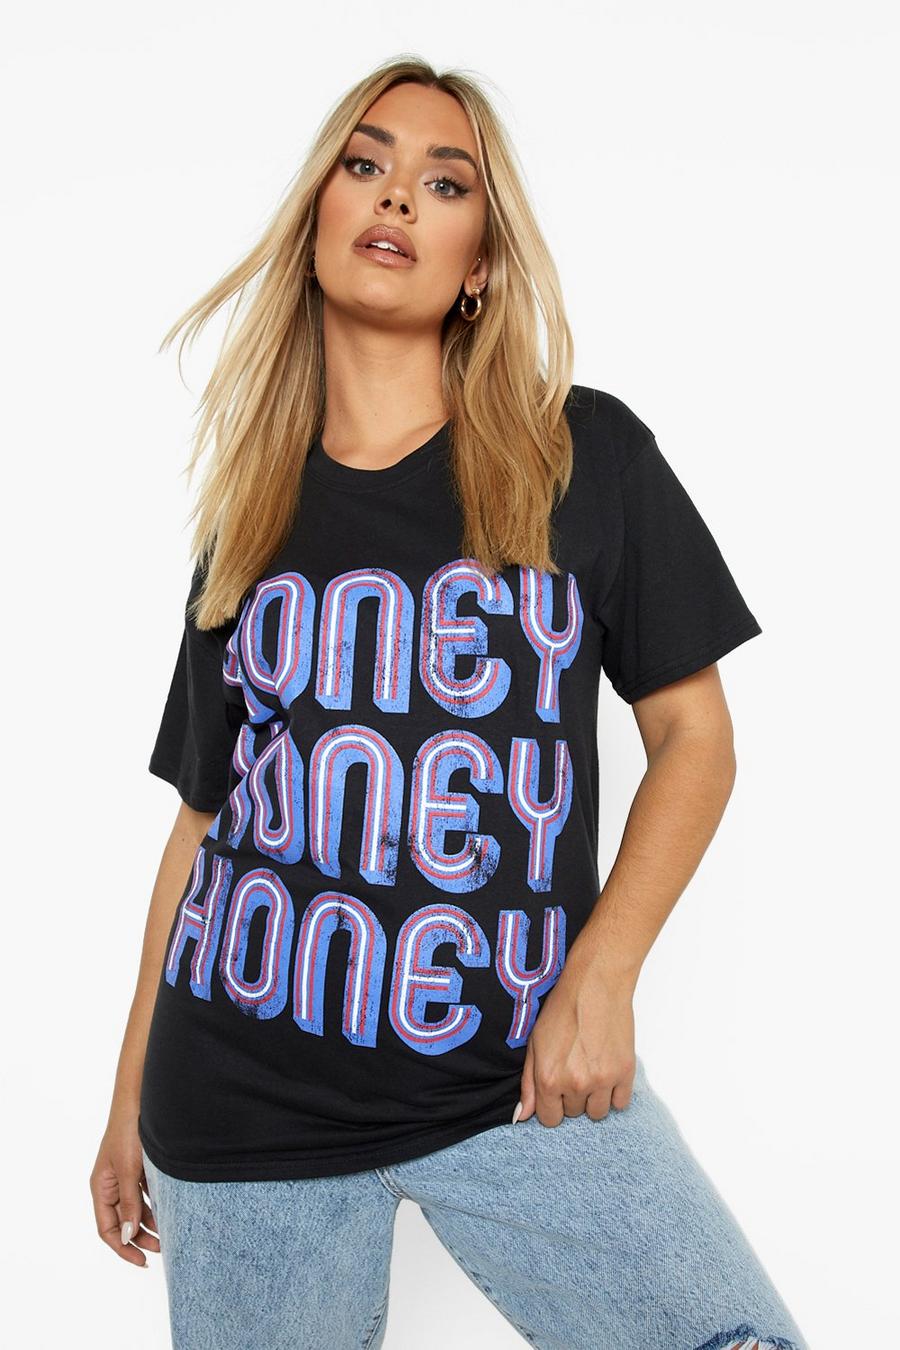 Black Plus Honey Graphic T-Shirt image number 1